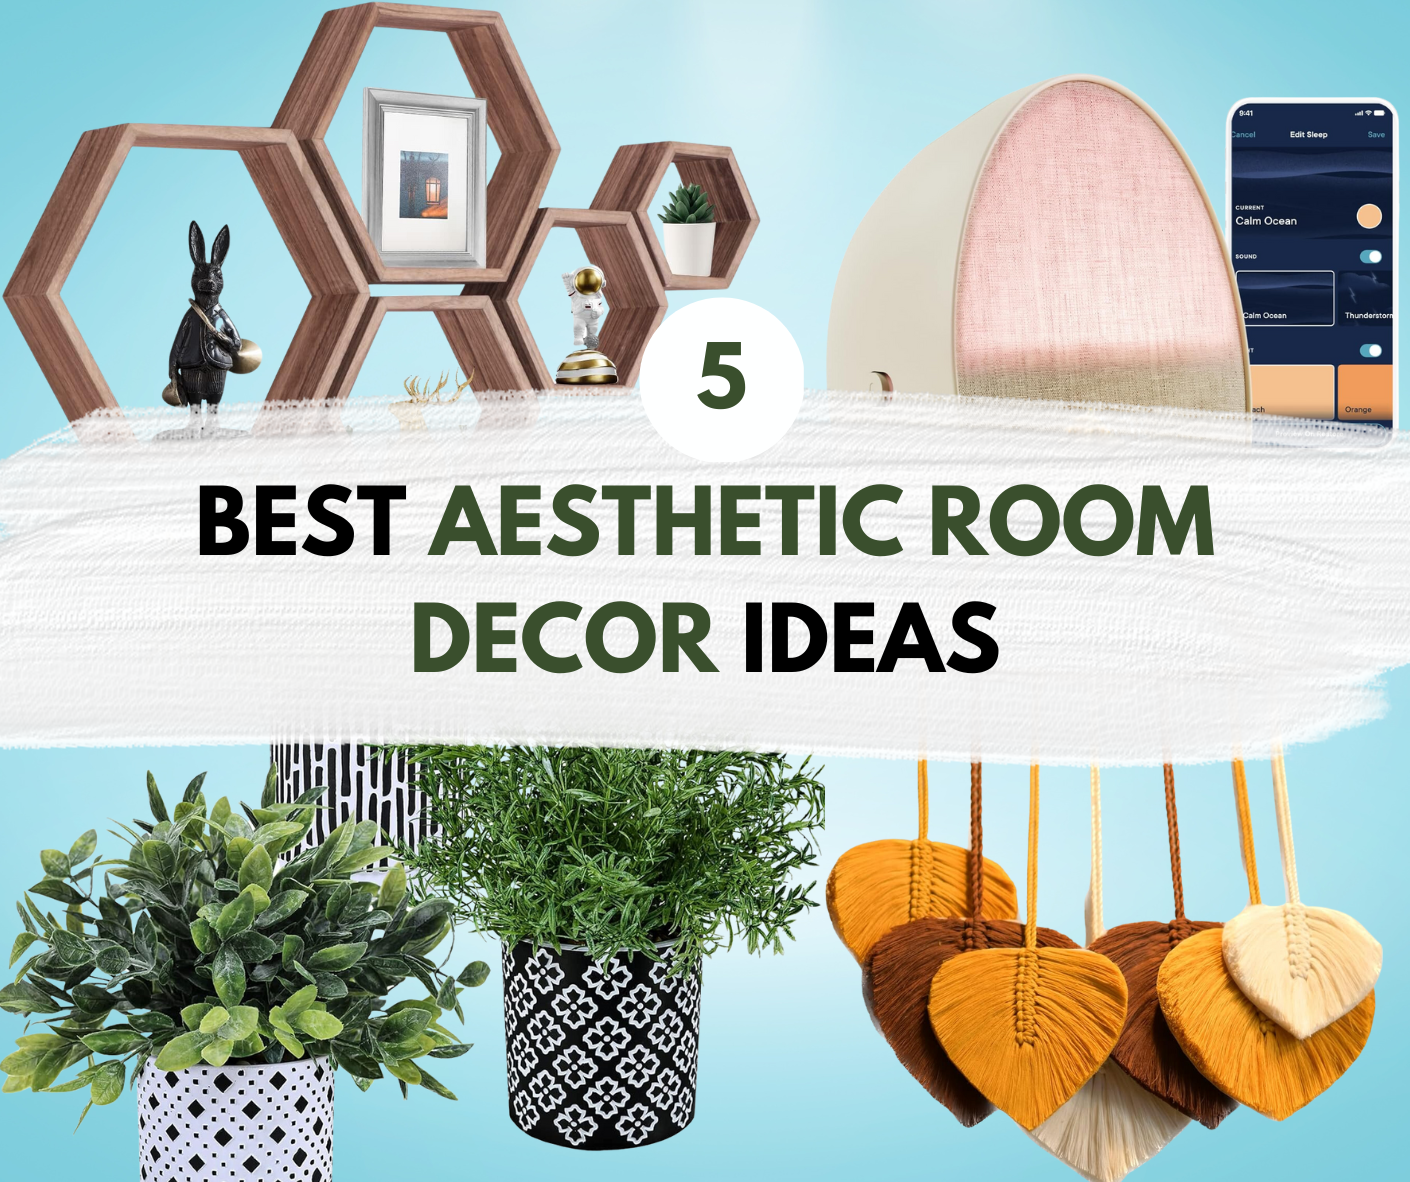 5 Best Aesthetic Room Decor Ideas from Amazon